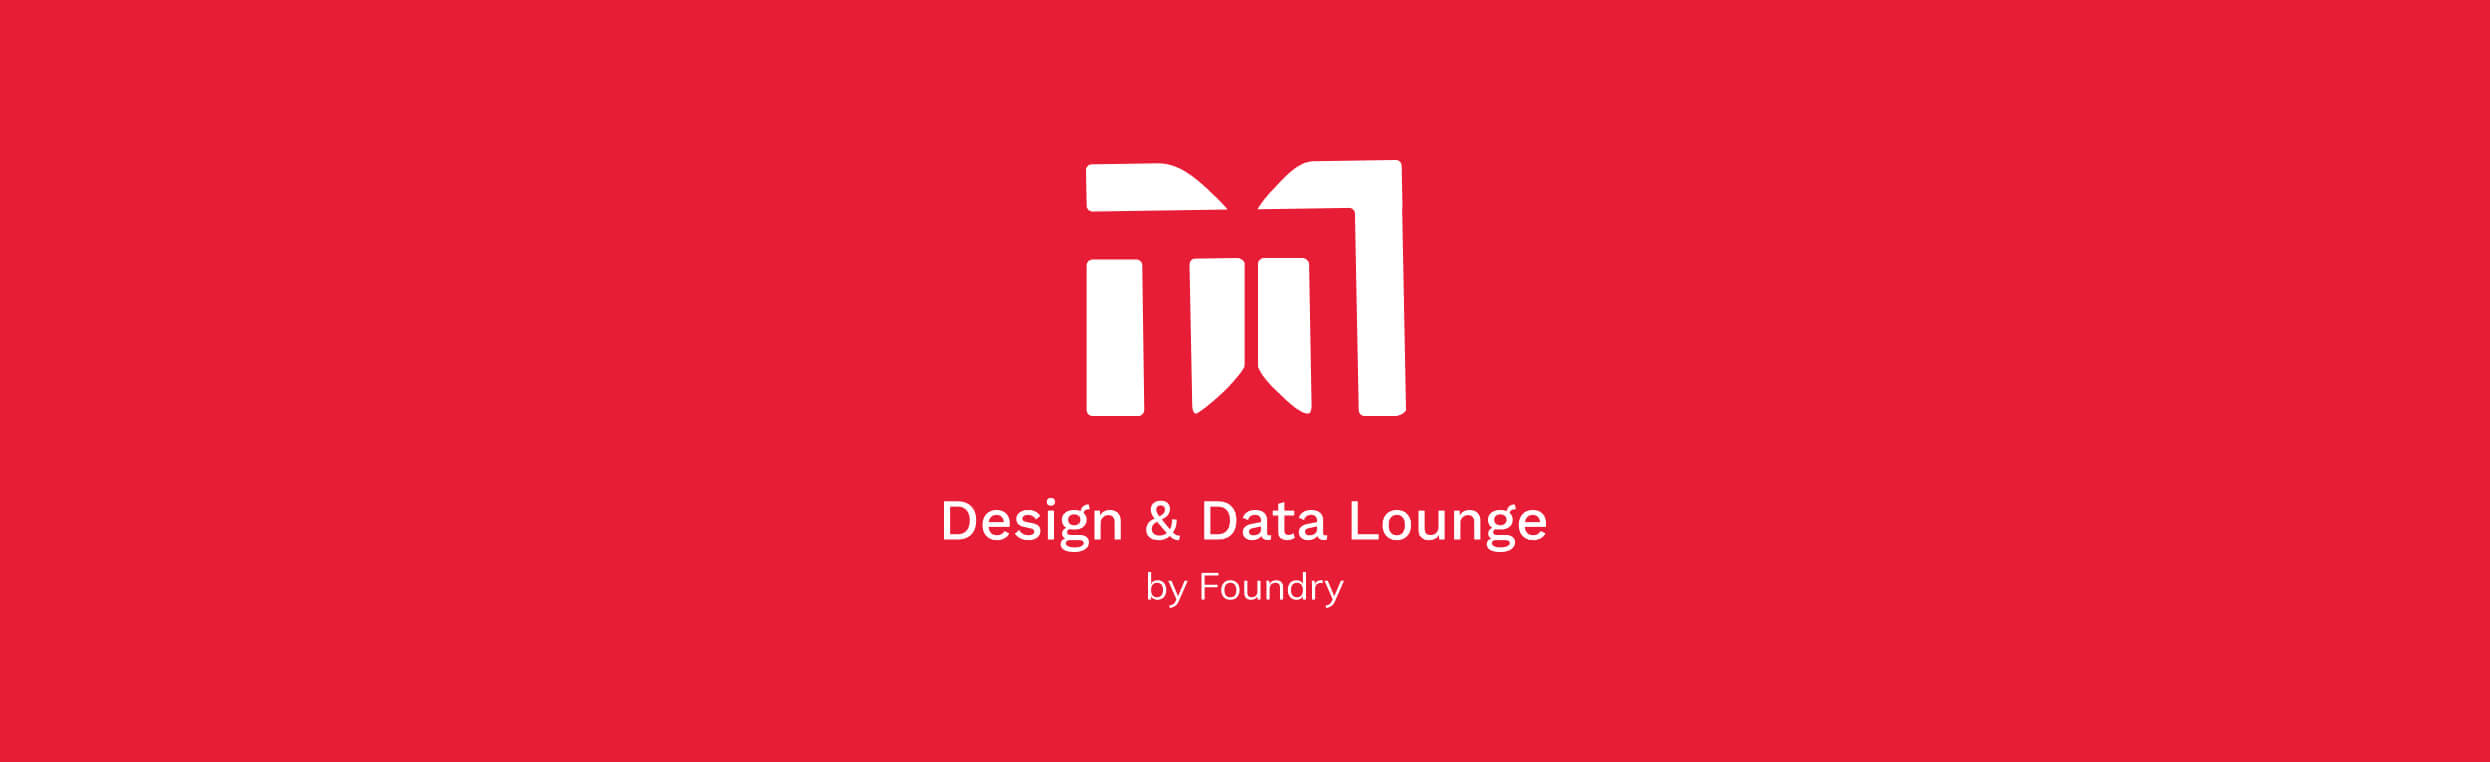 Design and Data Lounge Logo